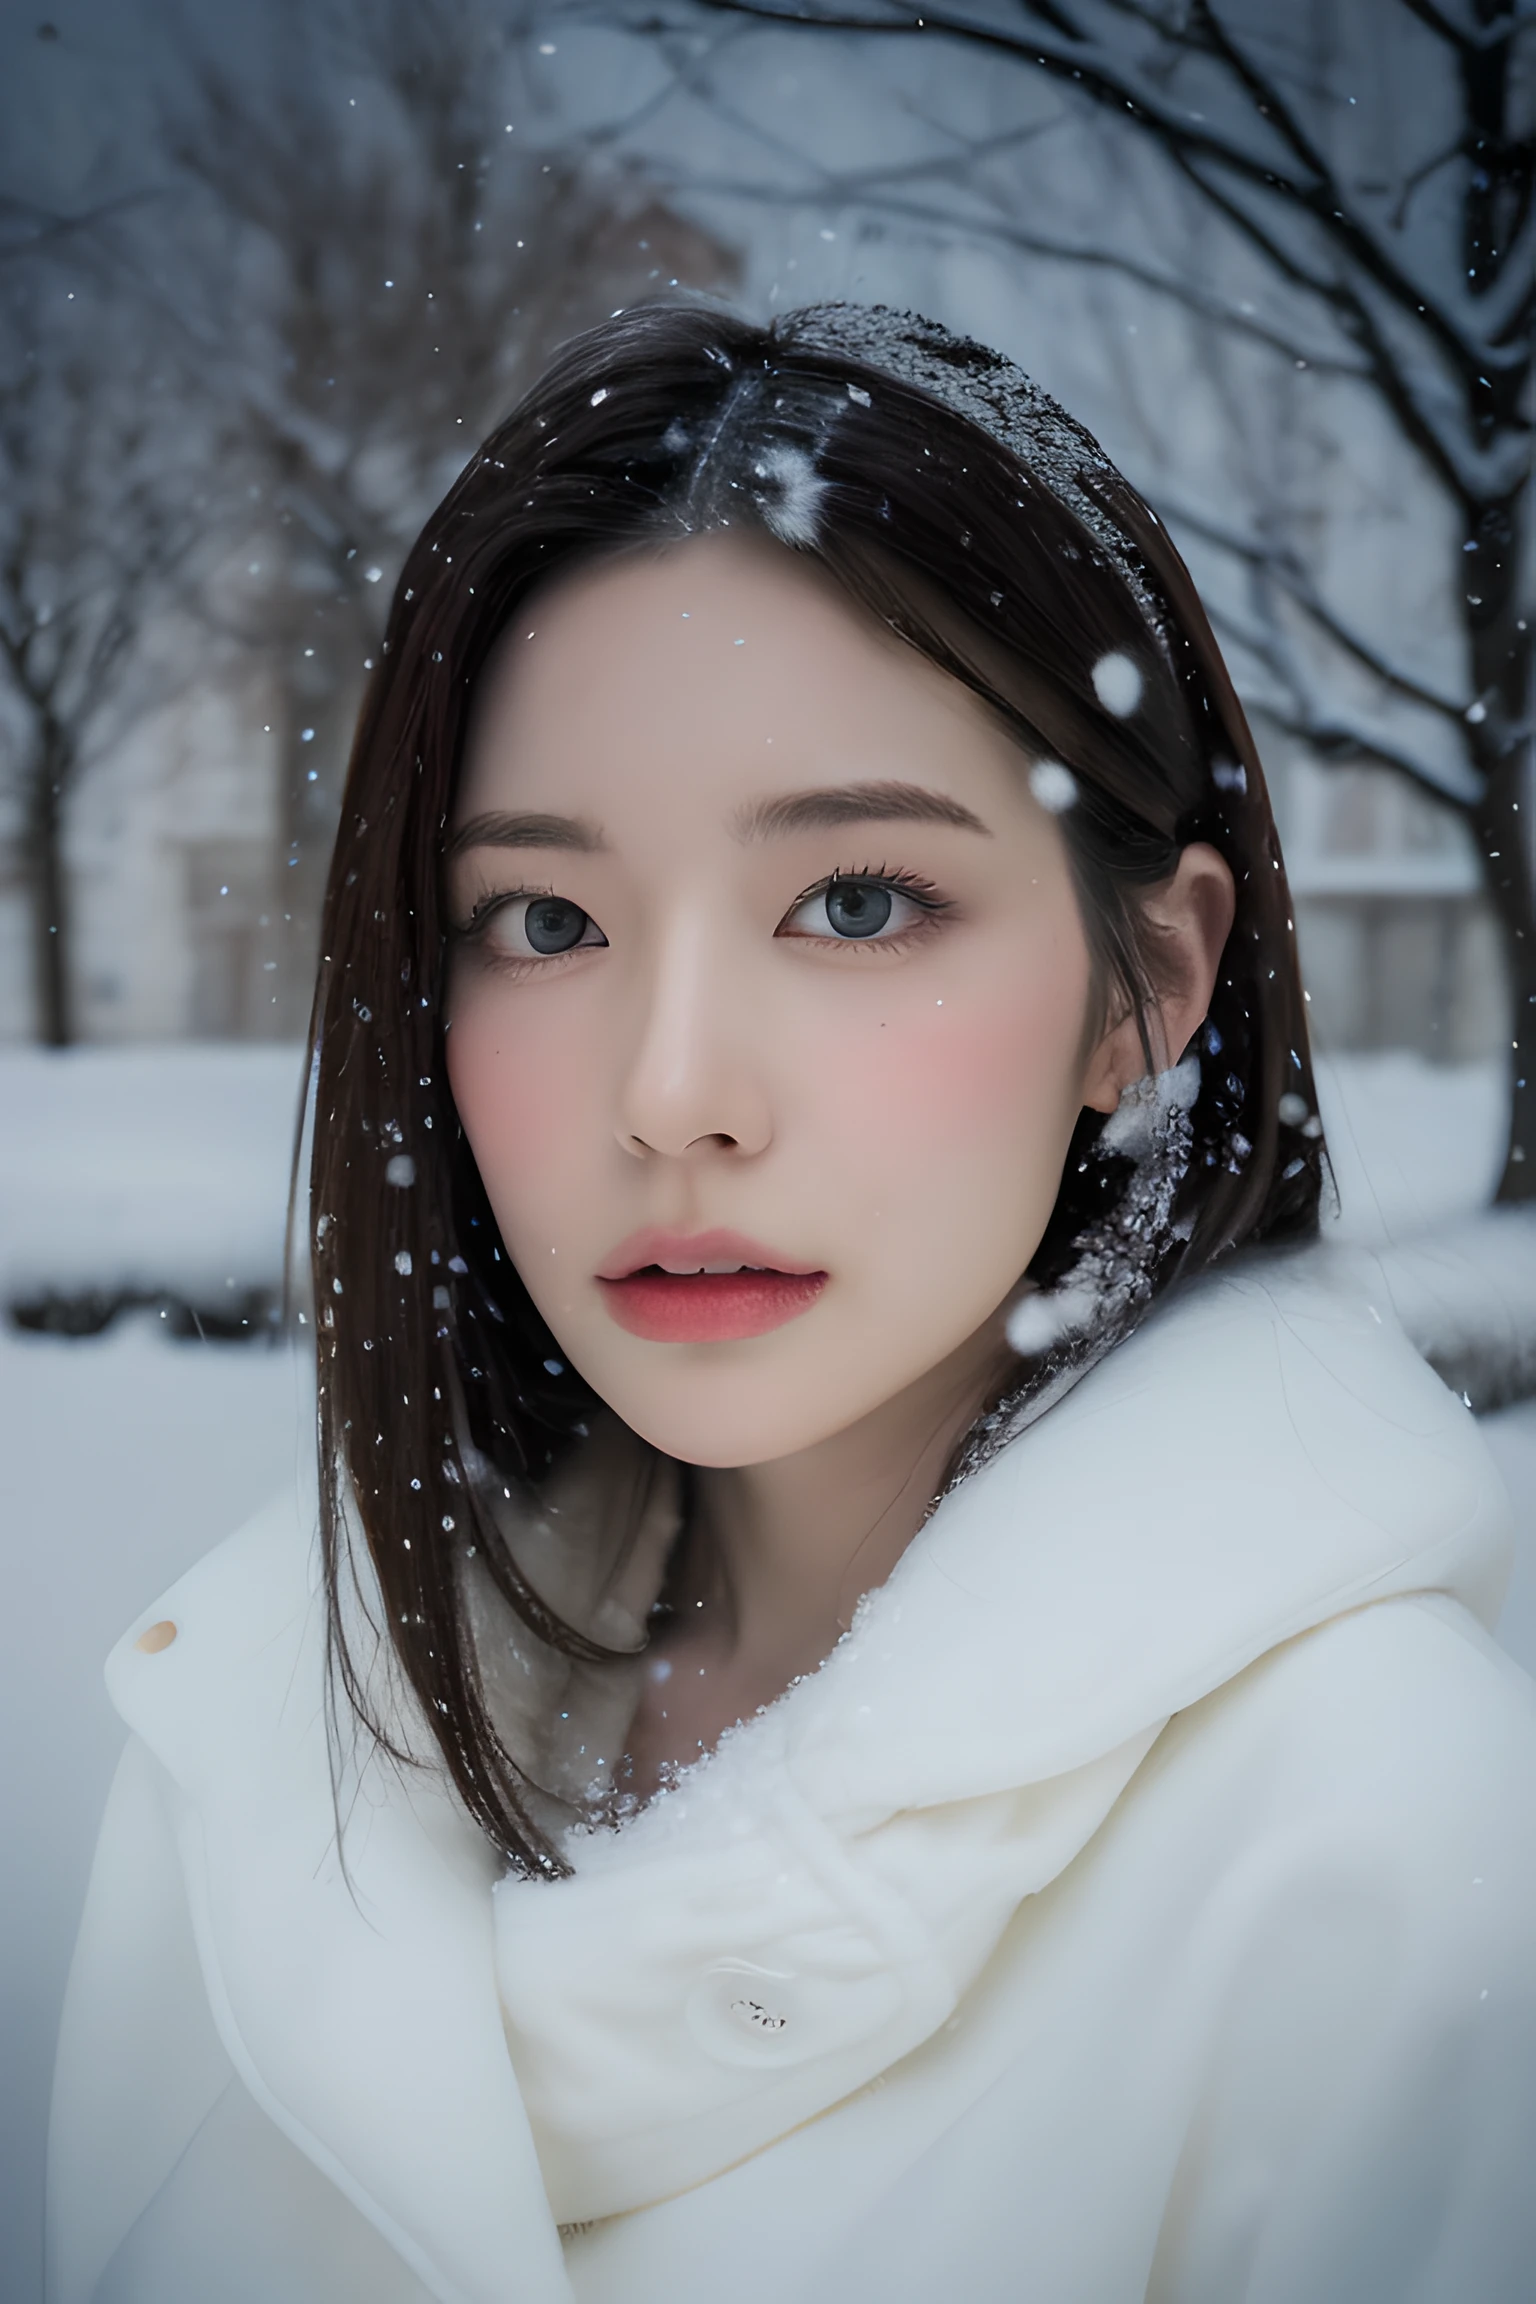 (8k, คุณภาพดีที่สุด, ผลงานชิ้นเอก, สูงมาก:1.2) รูปถ่ายของสาวญี่ปุ่นแสนสวยใน (สไตล์ของพอล รูเบนส์และรีเบคก้า เกย์:1.1) (หิมะฤดูหนาวอันเศร้าโศก:1.4)